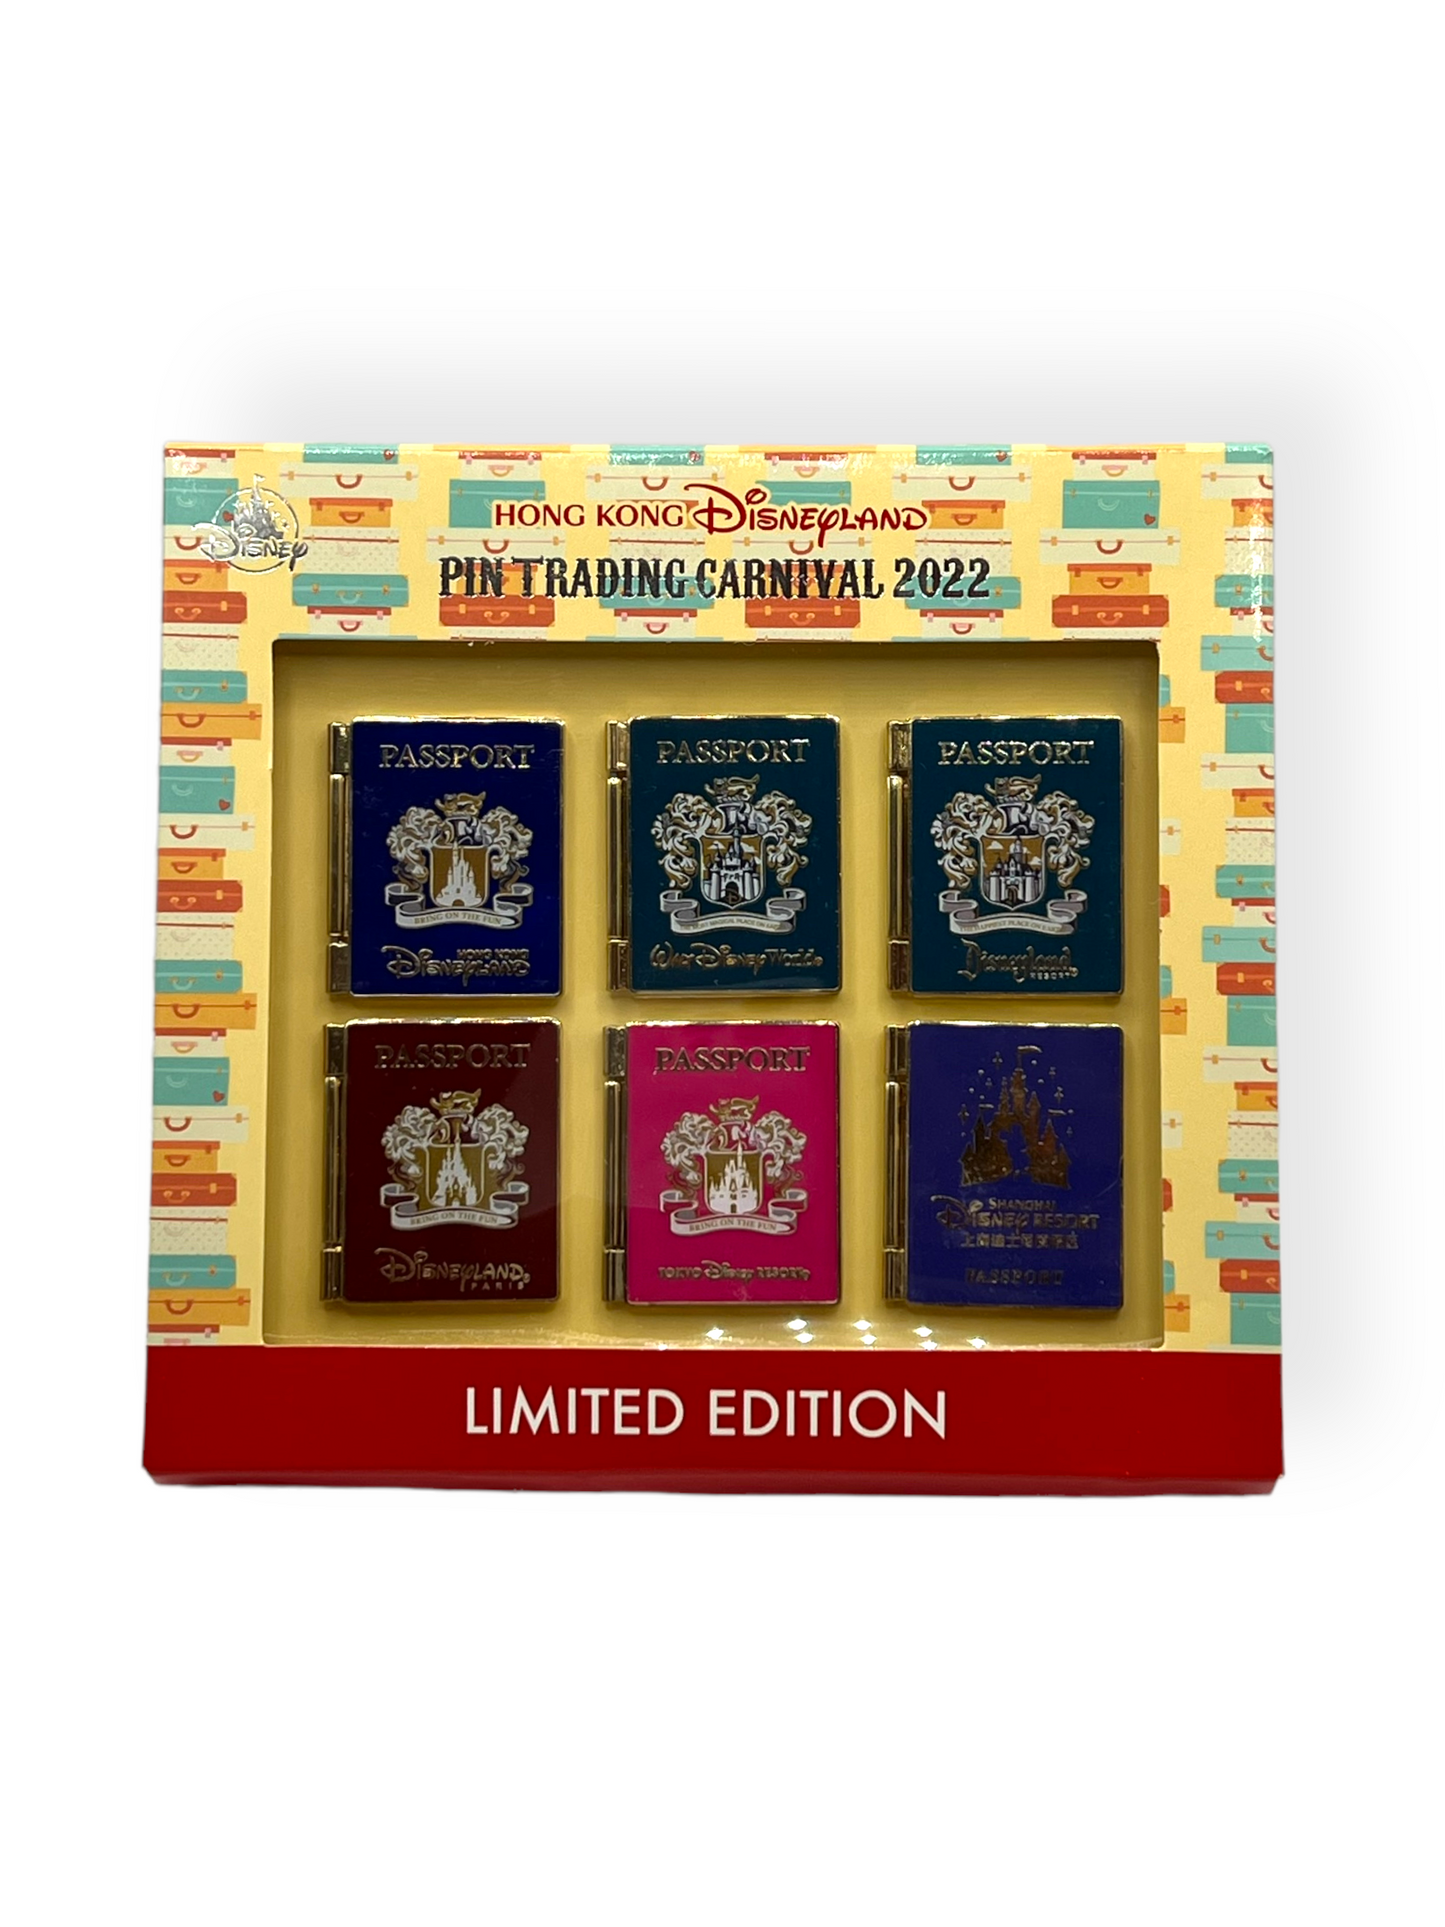 Hong Kong Pin Trading Carnival 2022 Passport Pin Set